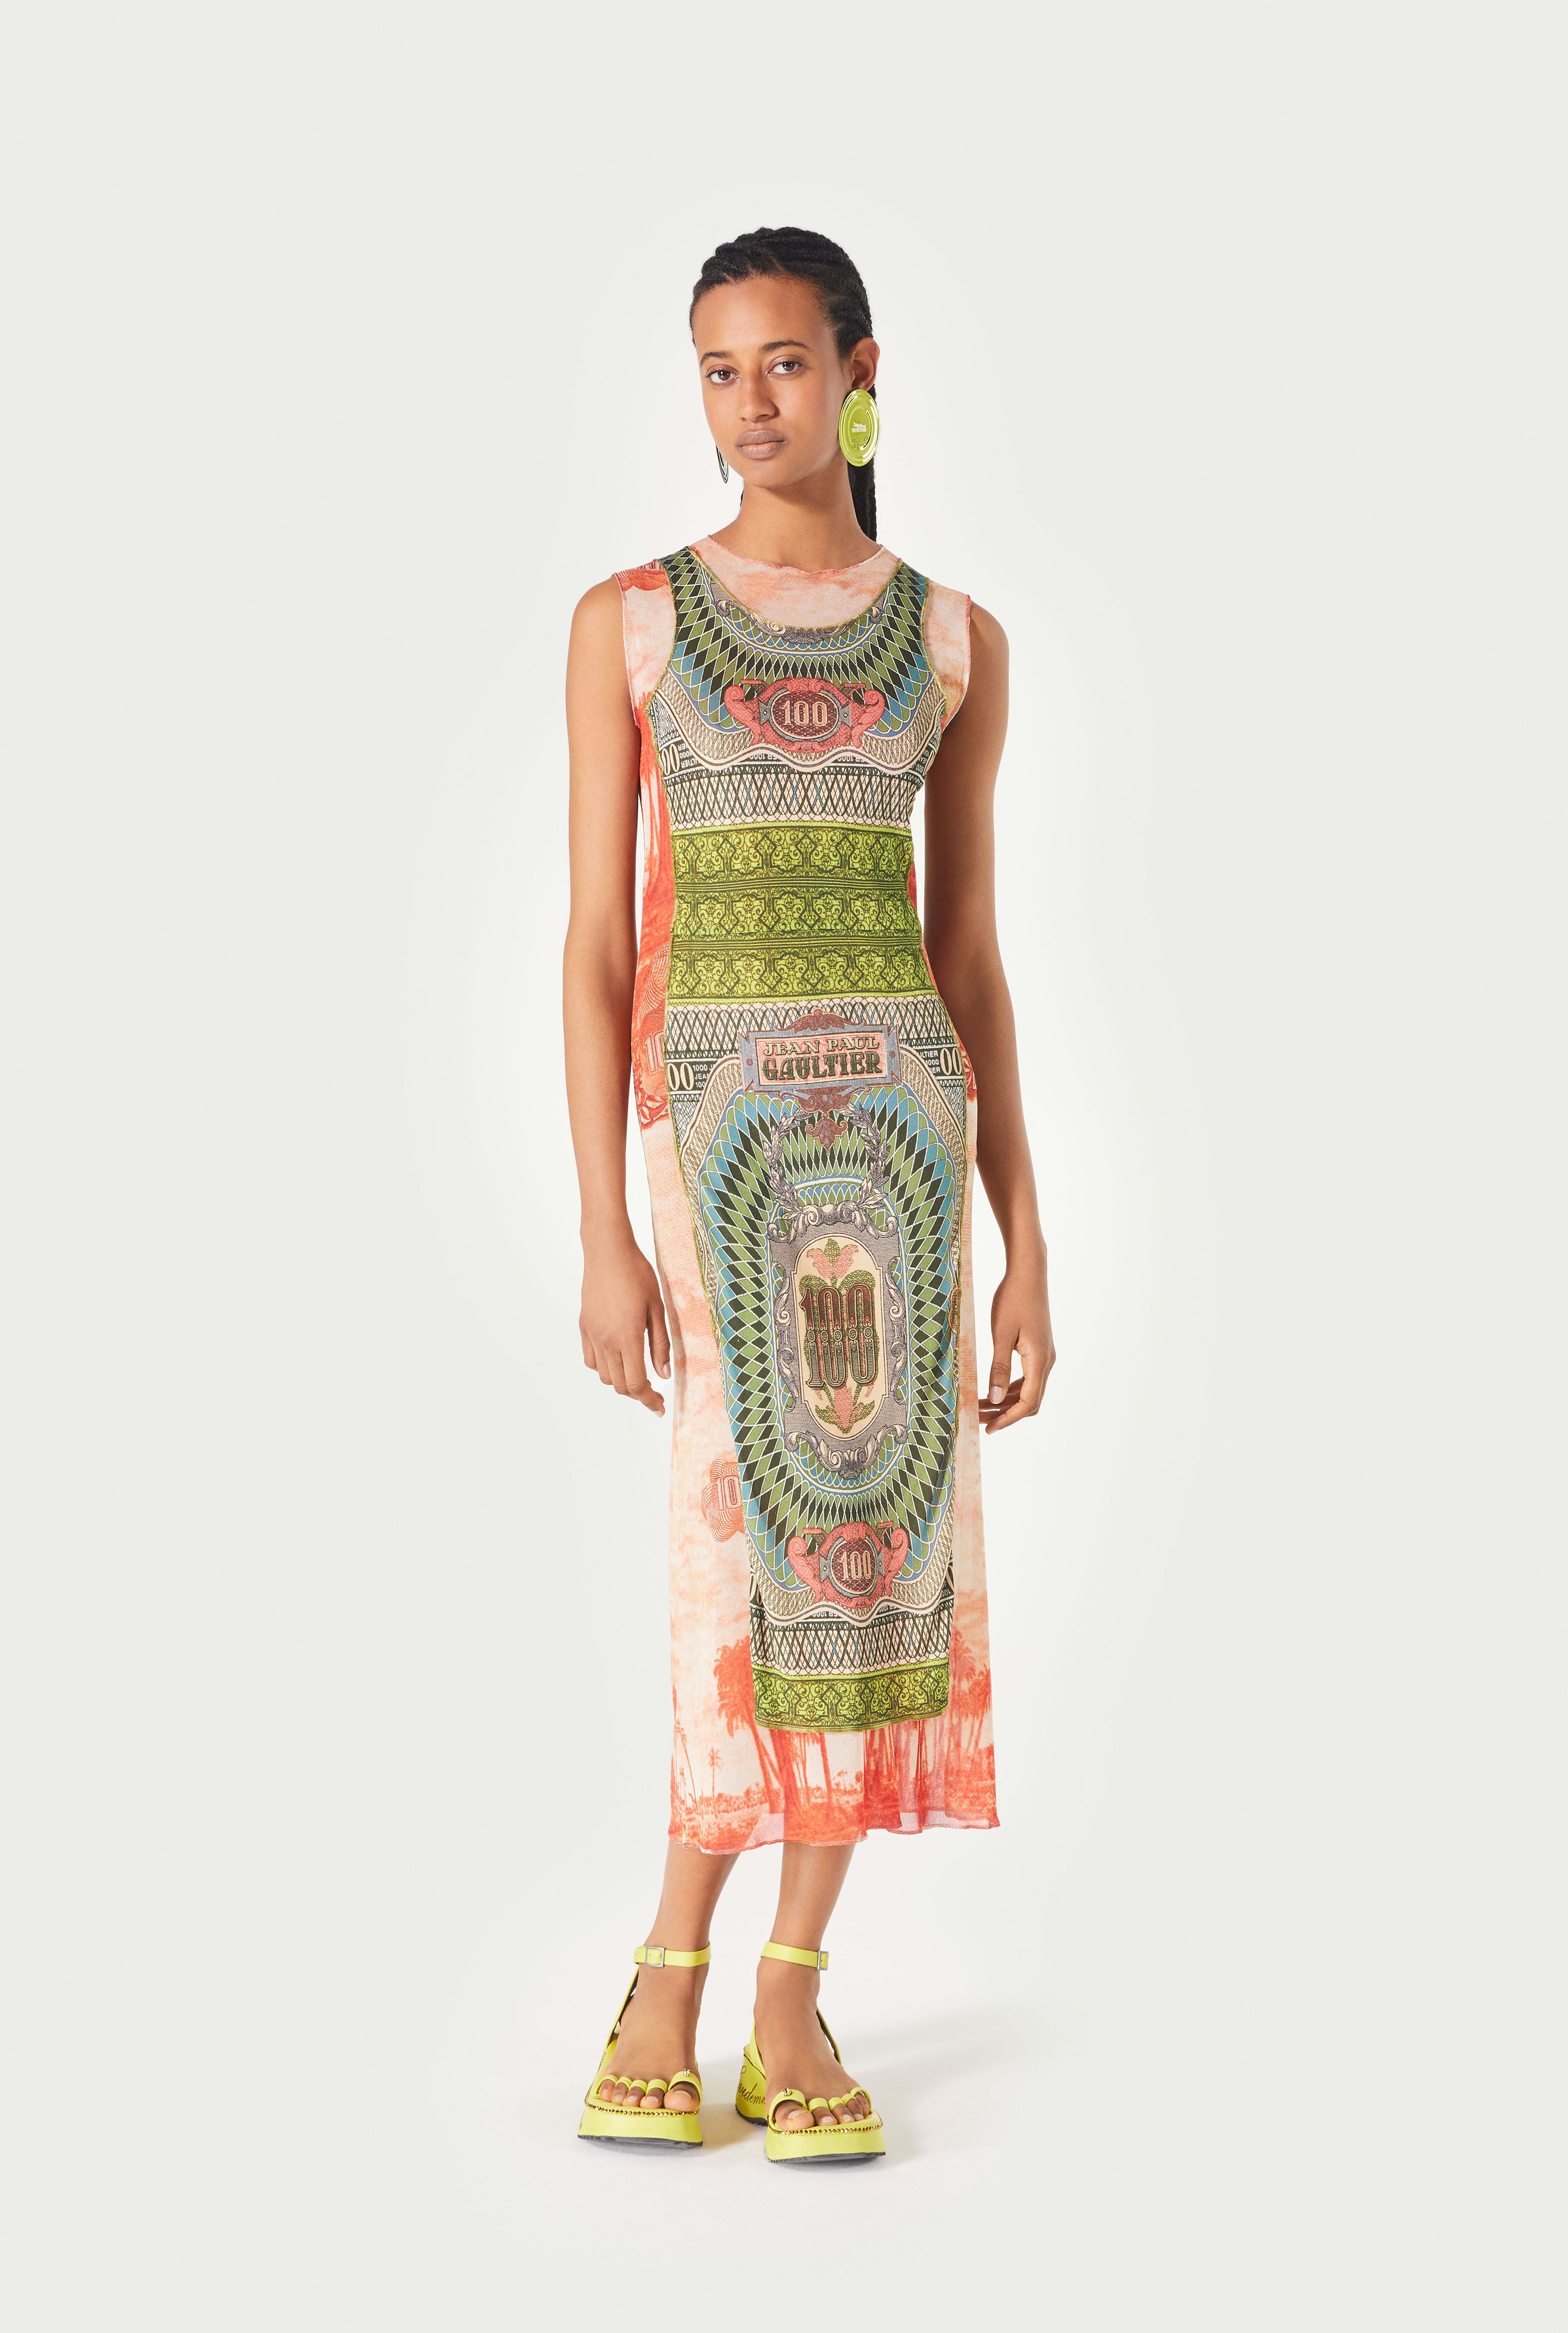 The Multi-Print Dress Jean Paul Gaultier